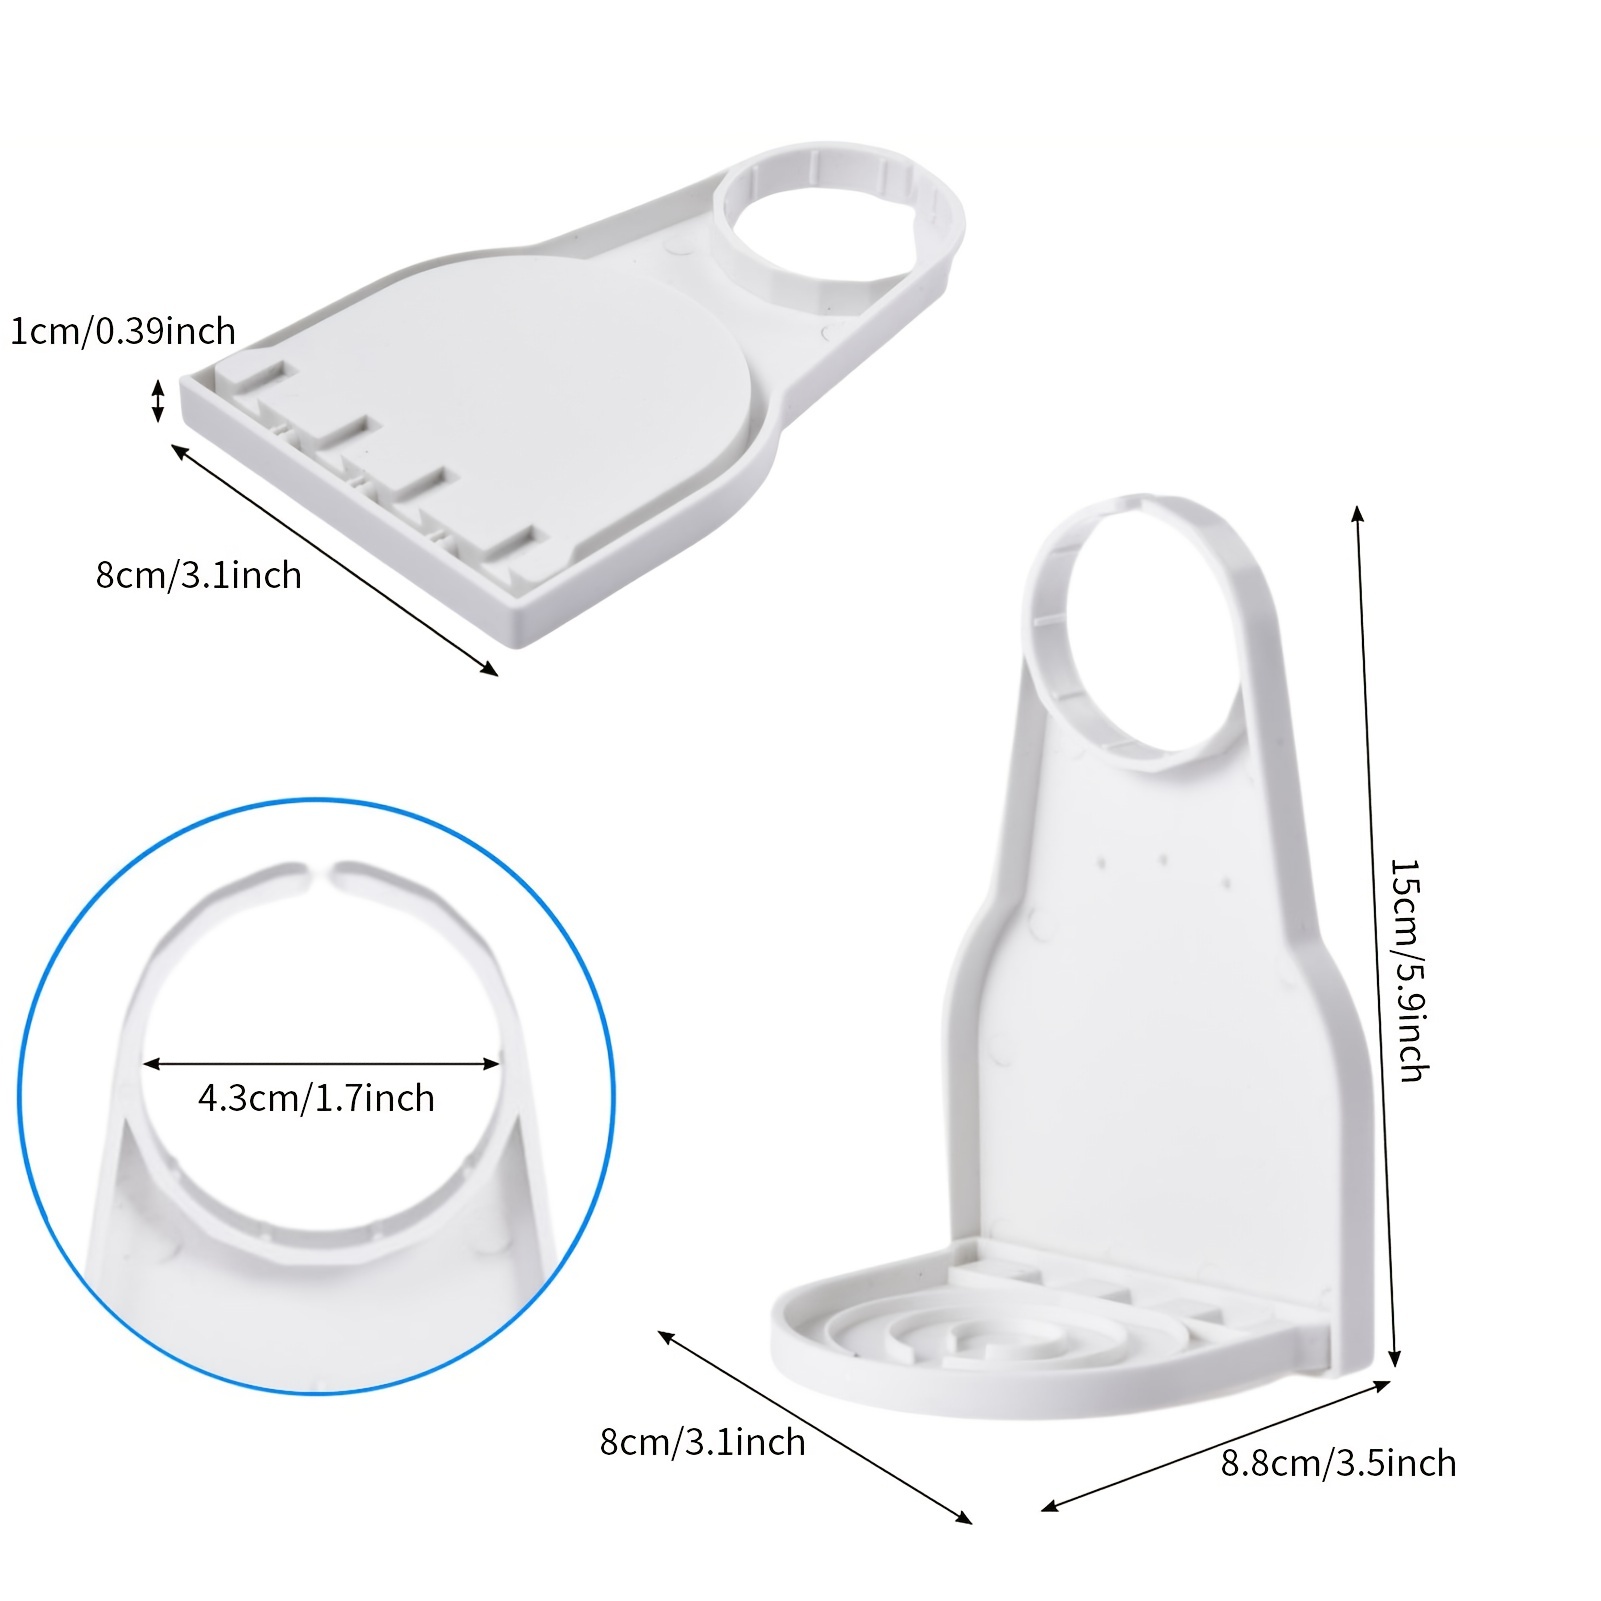 Impresa Laundry Detergent Drip Catcher [2 Pack] - Sturdy Detergent Cup Holder, Slides Under Tub - Hassle-Free Spill Prevention Solution - Keeps Room